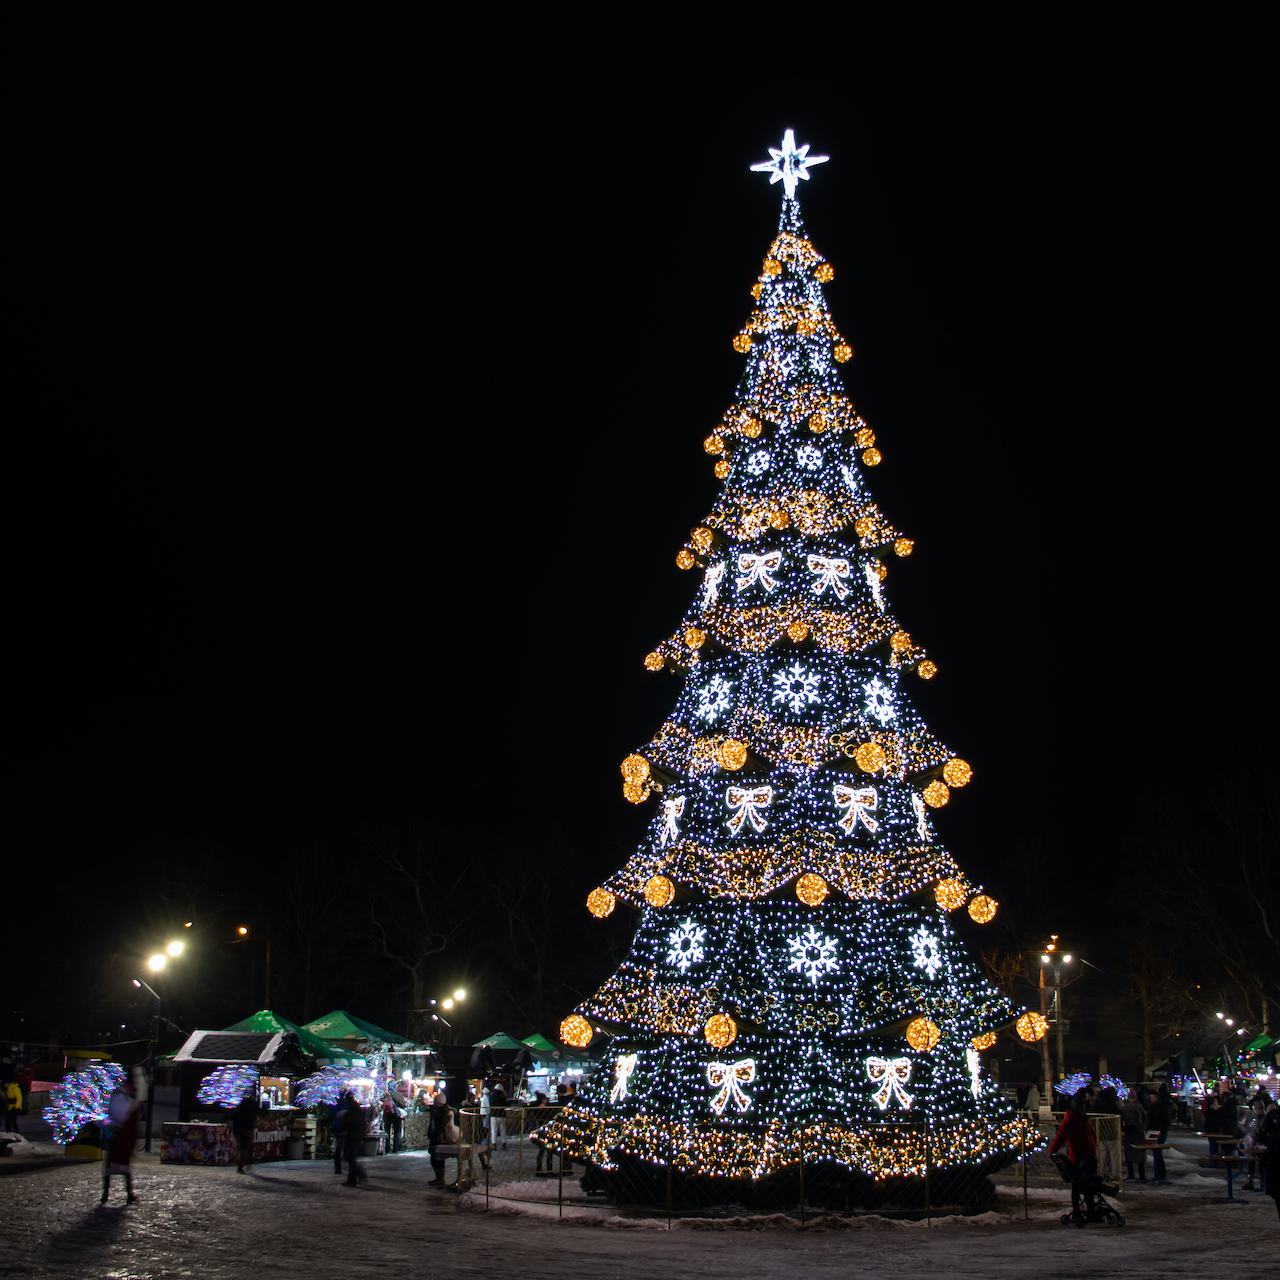 The Main Christmas Tree of Kherson. 2022